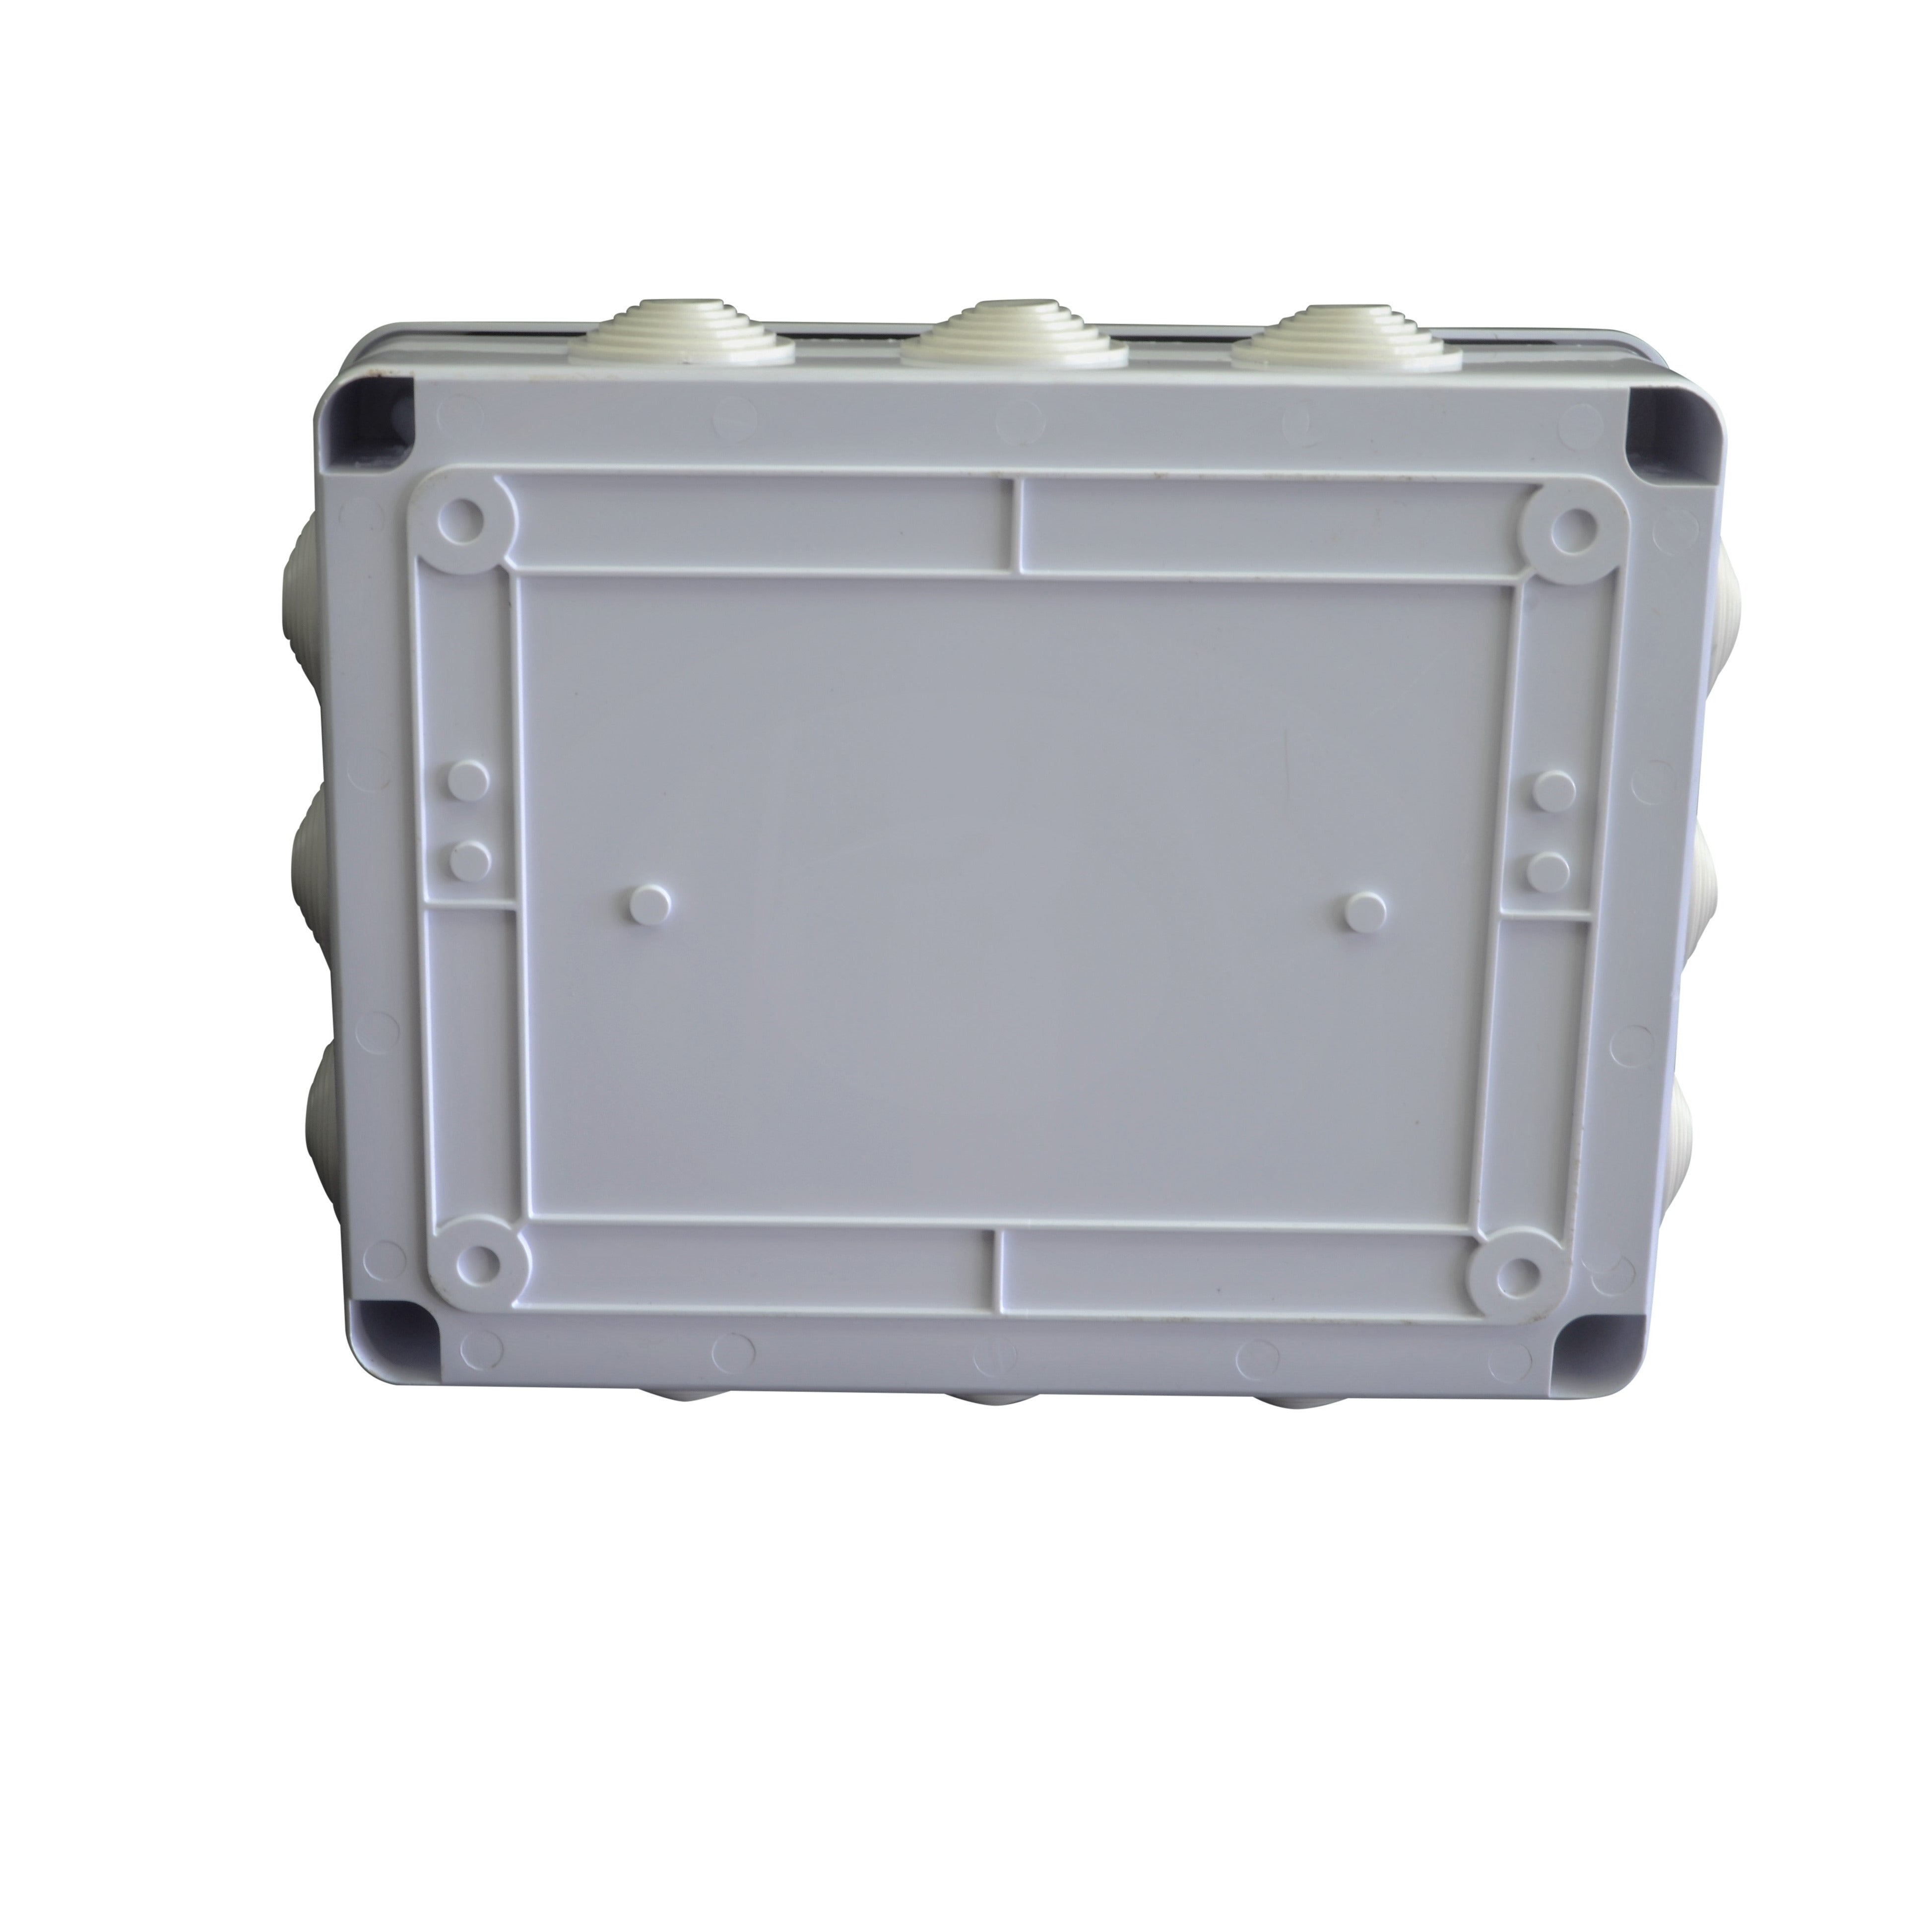 255x200x80 mm ABS Plastic IP65 Waterproof Junction Box